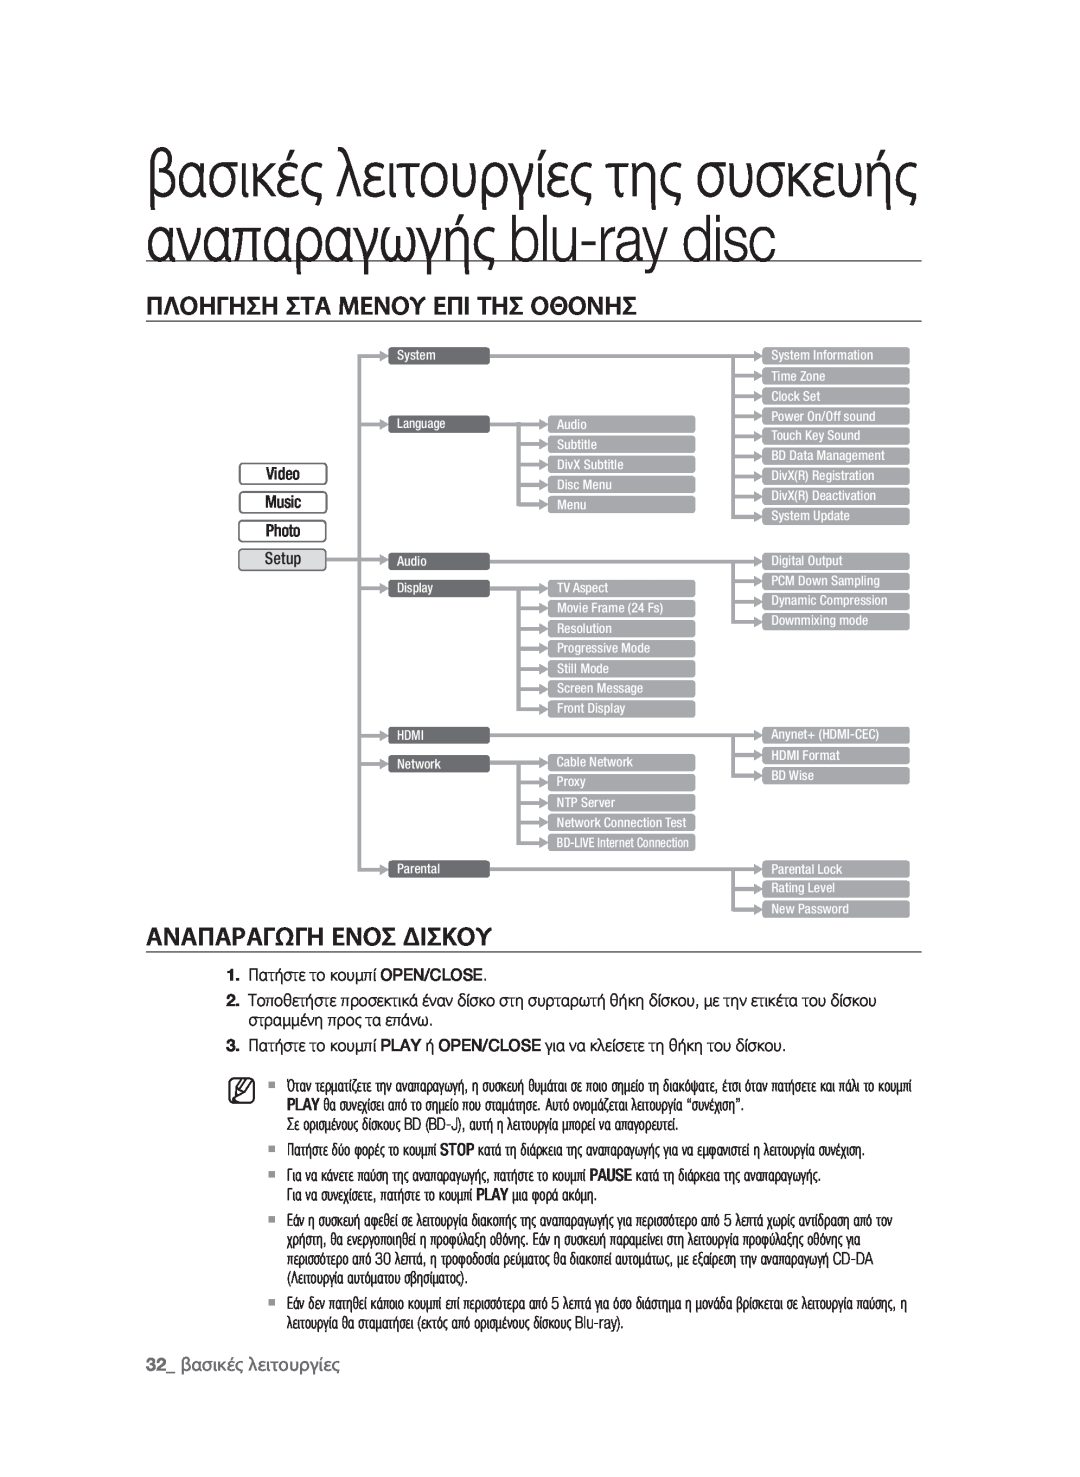 Samsung BD-P1580/EDC βασικές λειτουργίες της συσκευής αναπαραγωγής blu-ray disc, Πλοηγηση Στα Μενου Επι Τησ Οθονησ, Video 